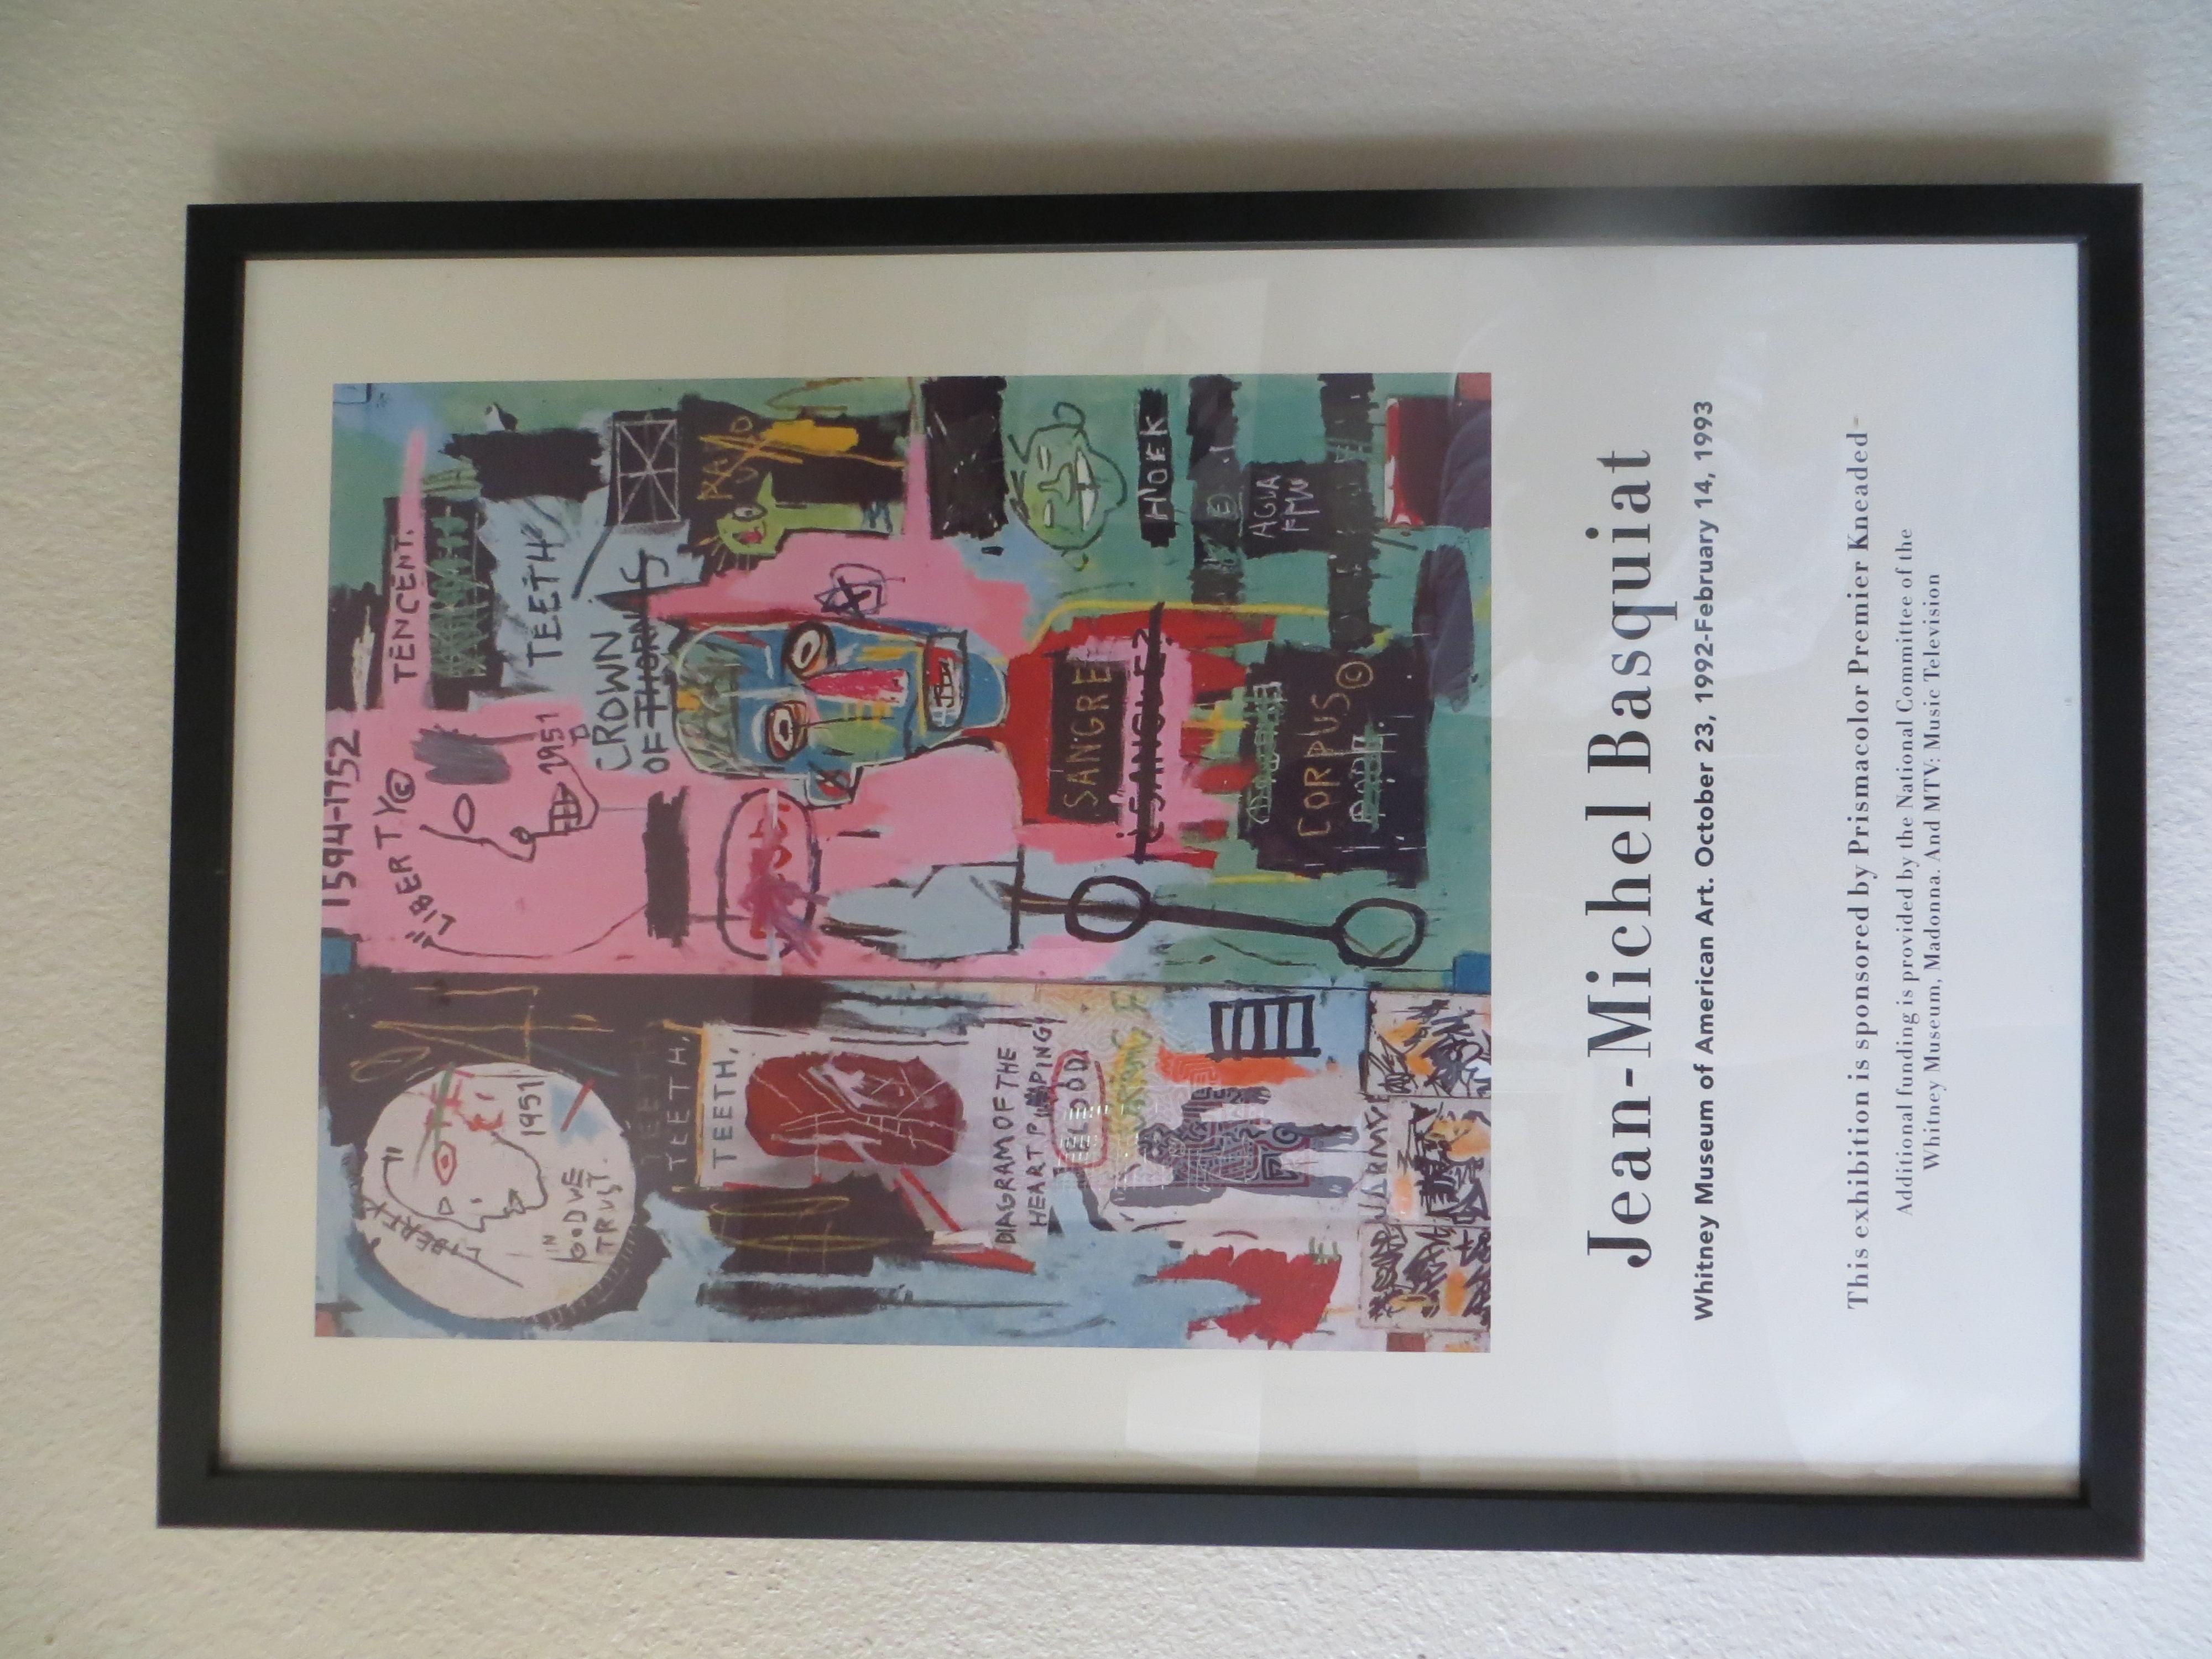  Jean-Michel Basquiat  Exhibition Poster 4